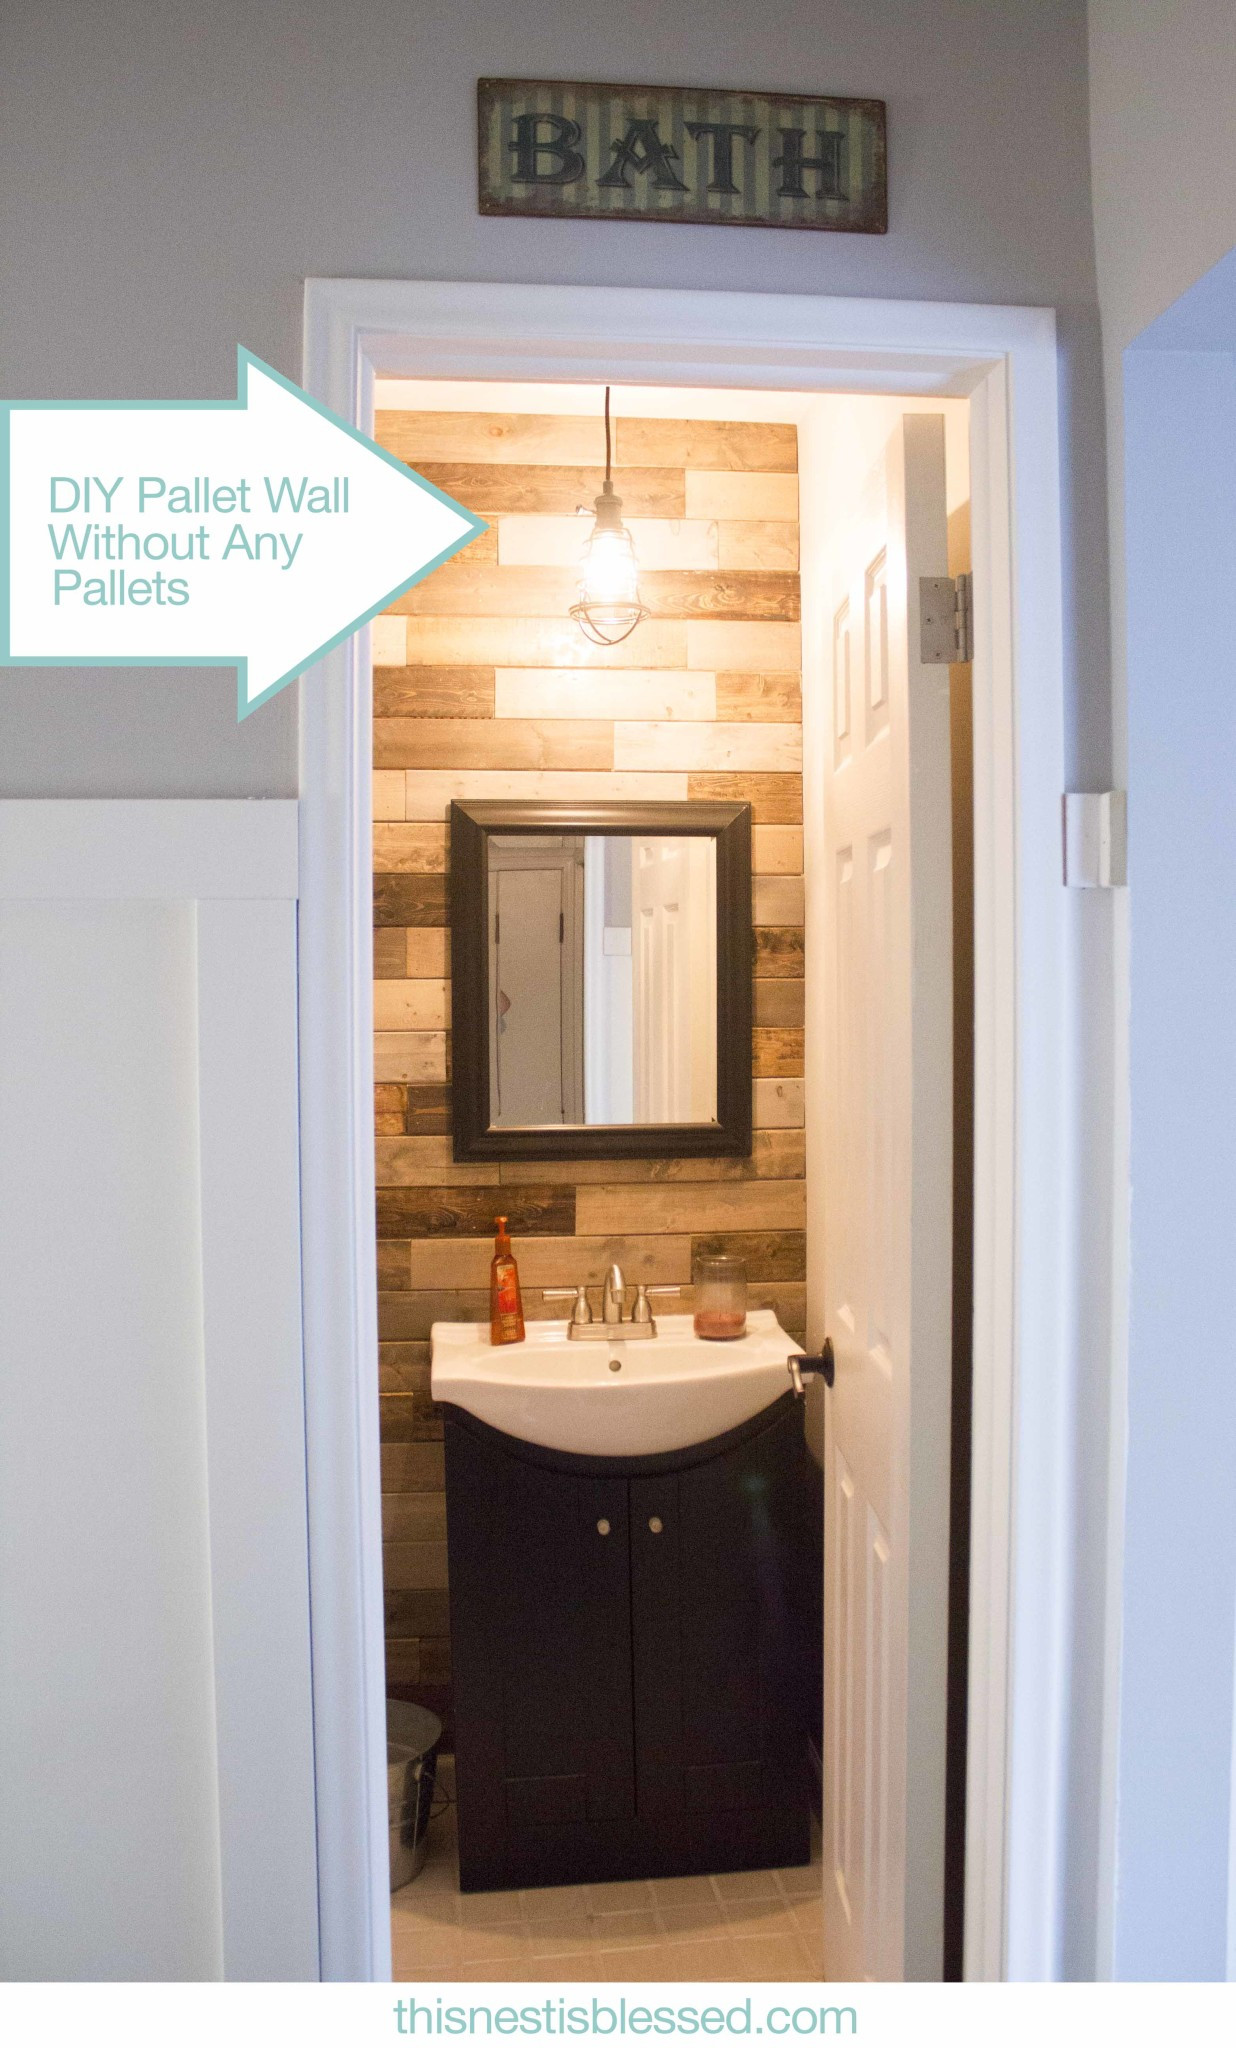 Plank Wall Bathroom
 Weekend Bathroom Makeover For $150